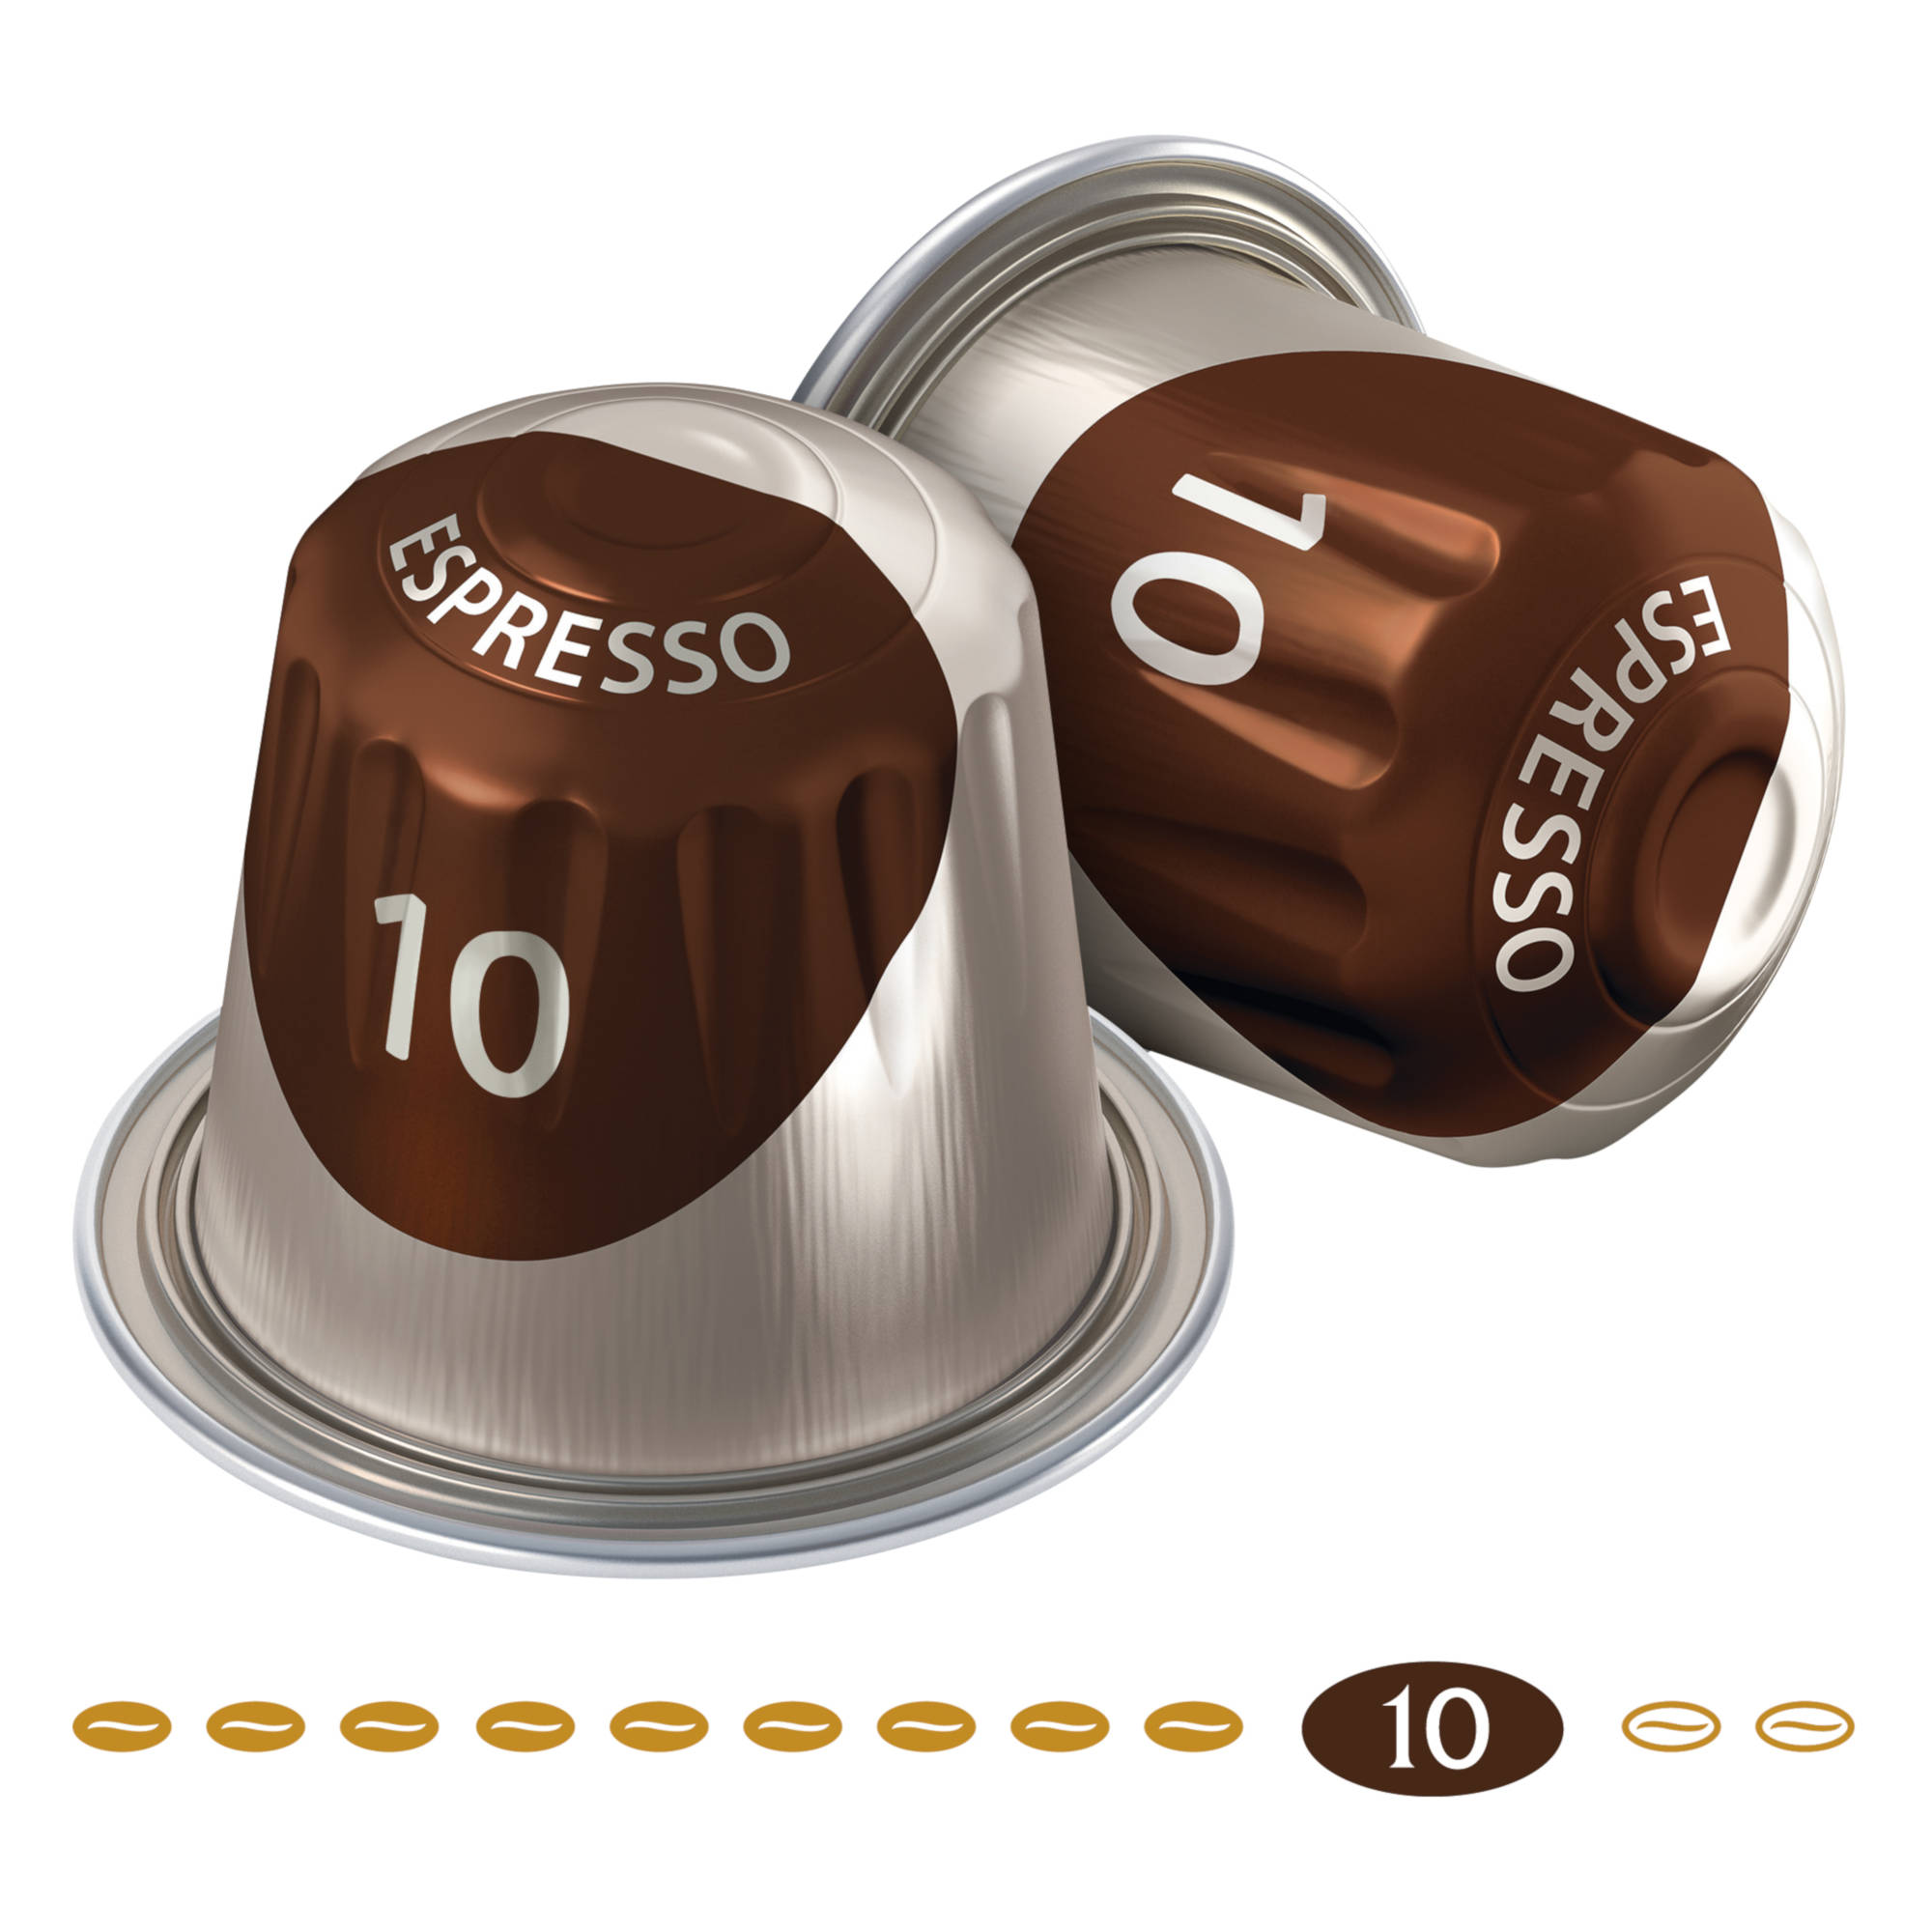 JACOBS Espresso 10 Intenso 10 Kaffeekapseln Nespresso®* x (Nespresso System) kompatible 20